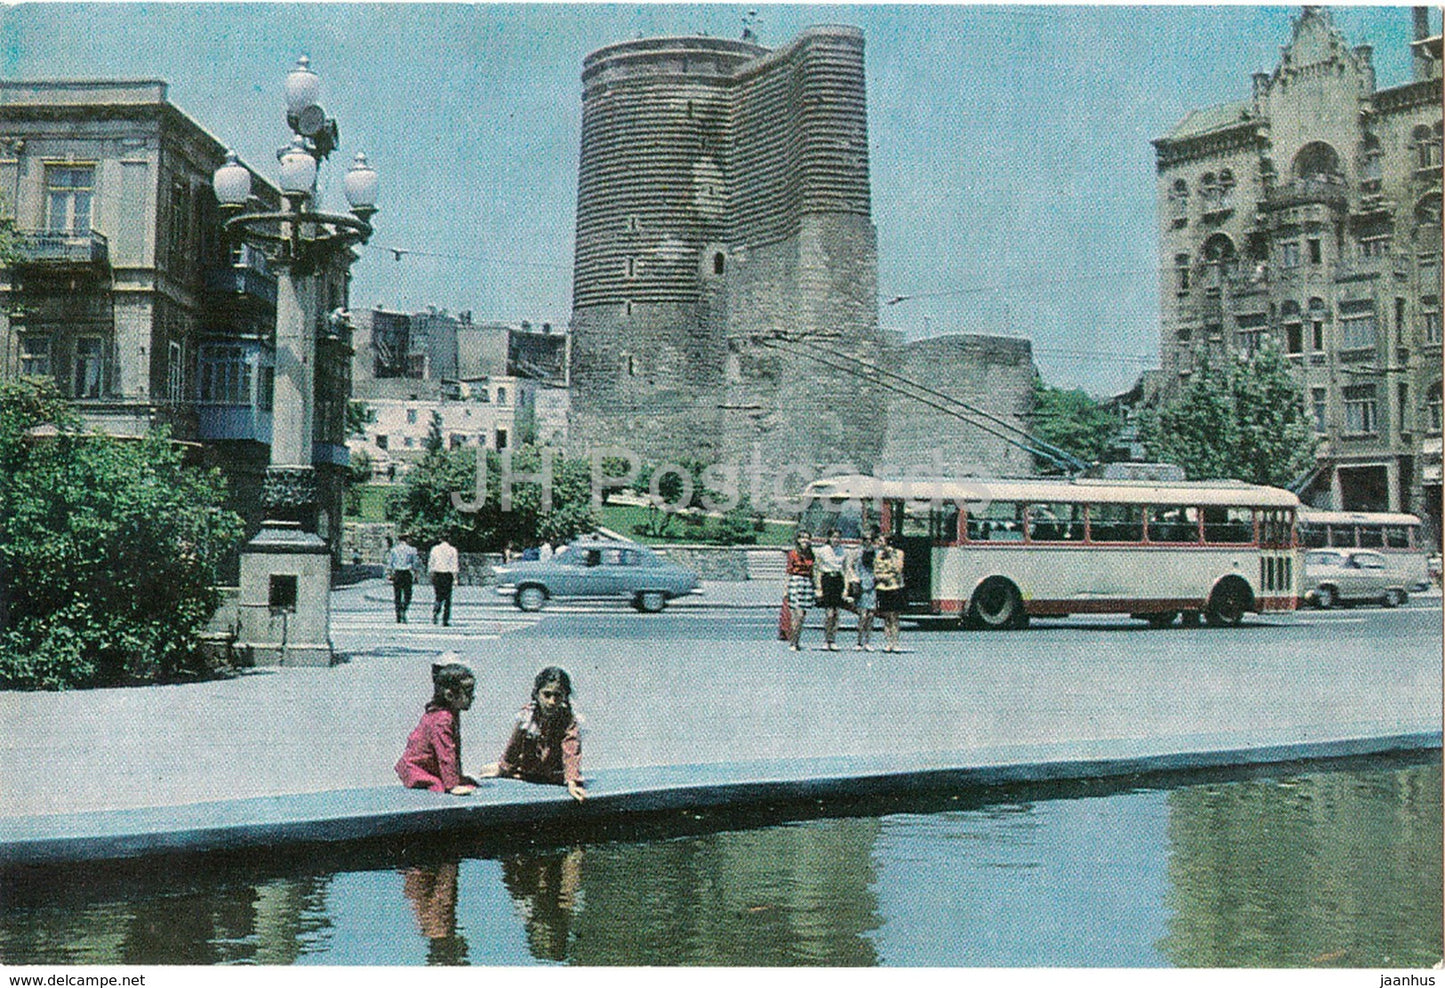 Baku - Maiden's Tower - trolleybus - 1972 - Azerbaijan USSR - unused - JH Postcards